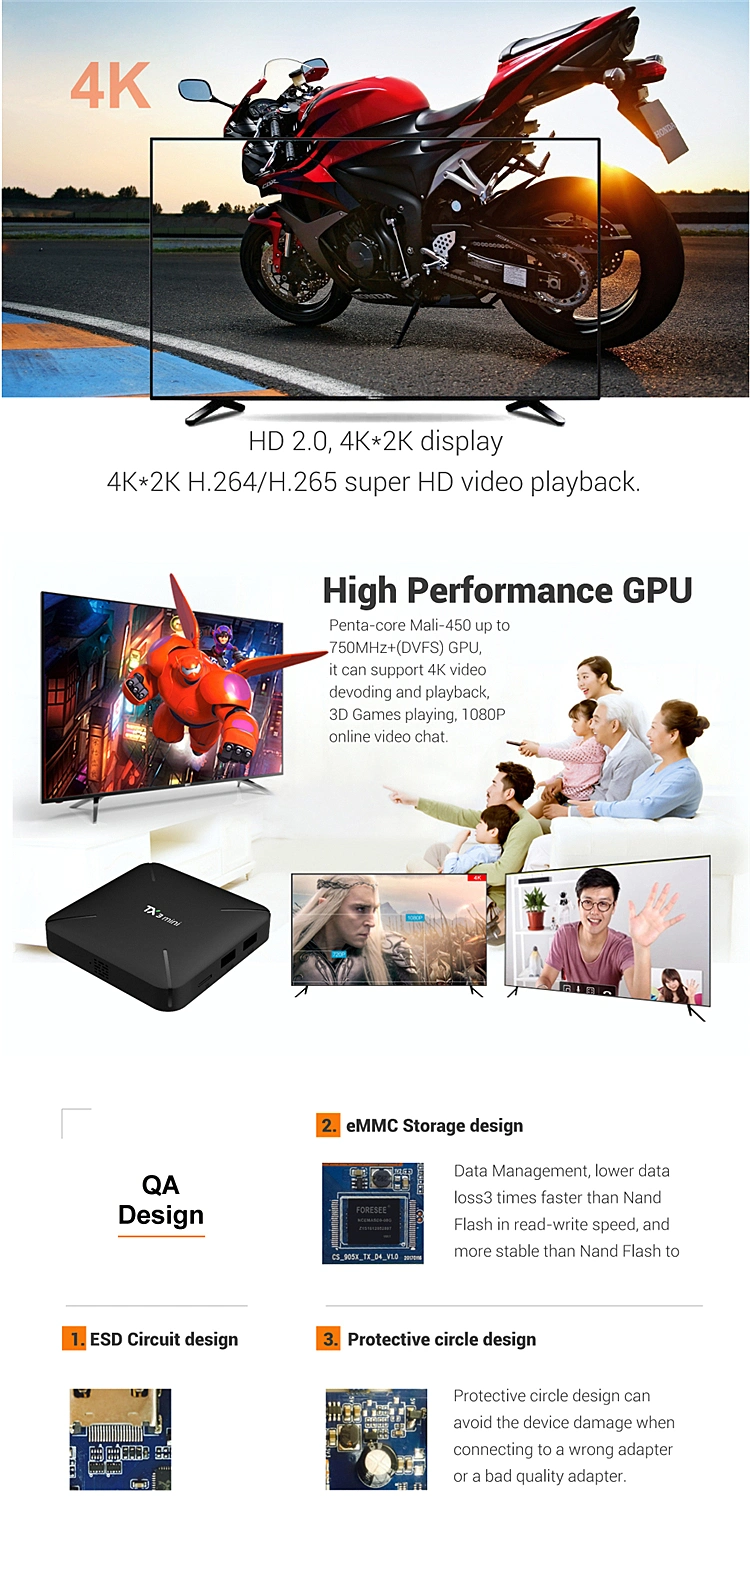 Android Ott TV Box Tx3 Mini-H S90W 2g 16g Free to Air Mouse Set Top Box HD TV Box TV Box Andriod Smart TV Box